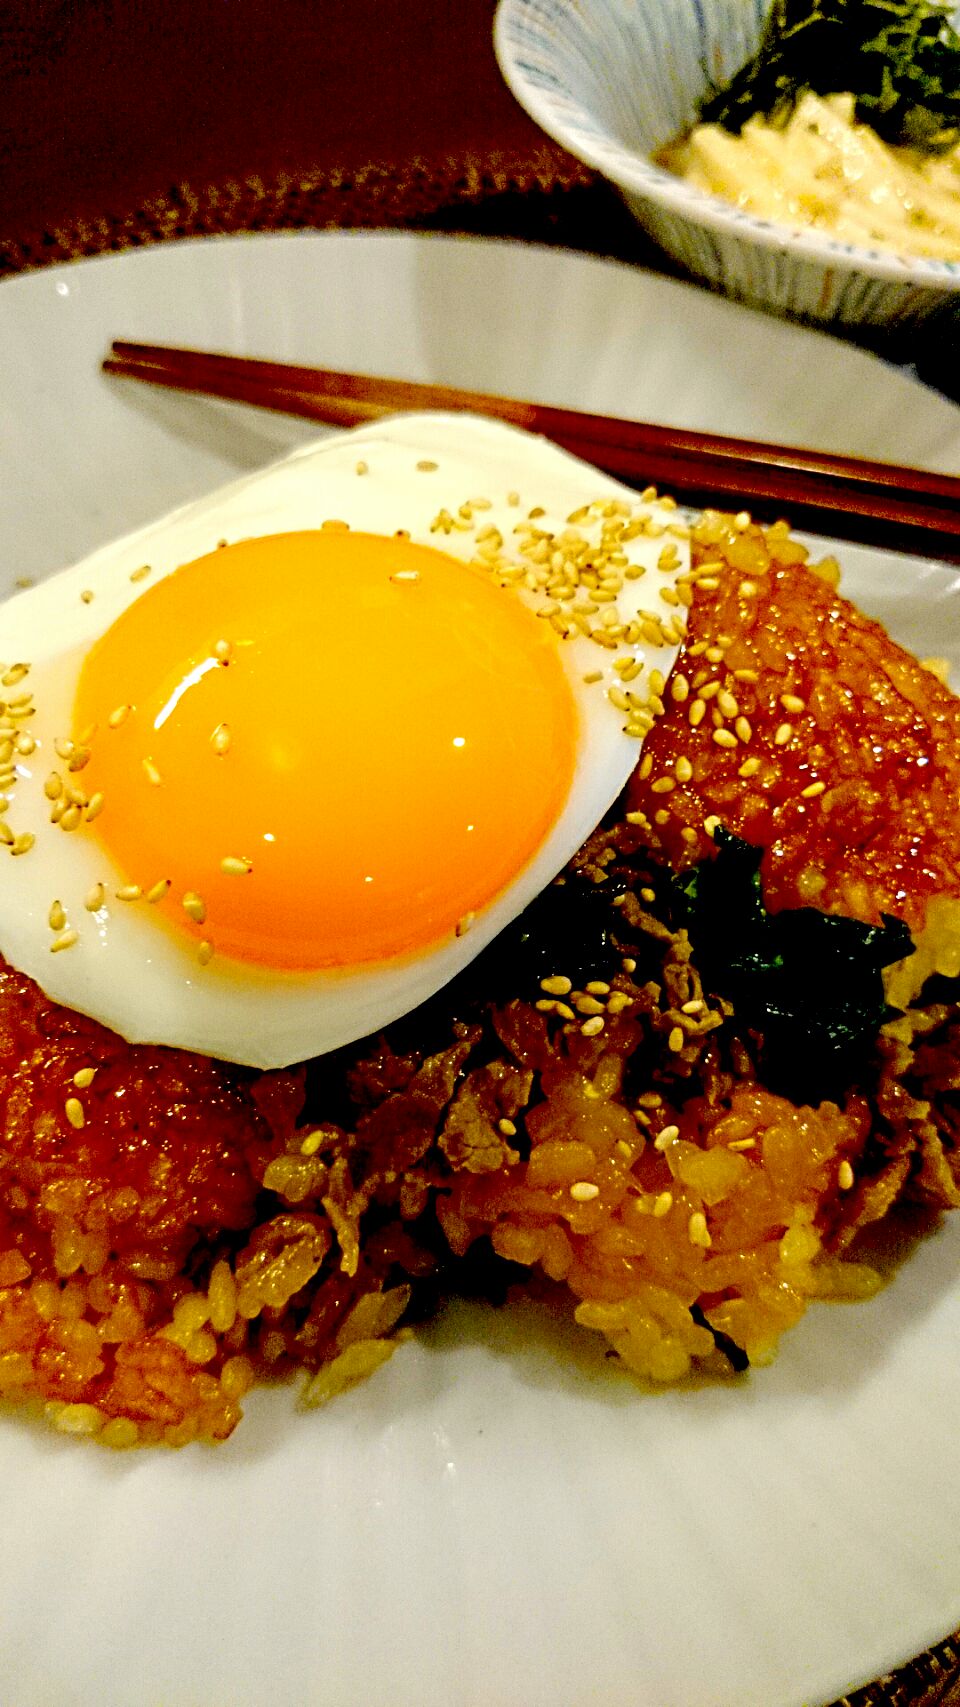 Today Dinner is くららちゃんの炊飯器de韓国風カルビ炒飯☆
～オコゲの魅力❤